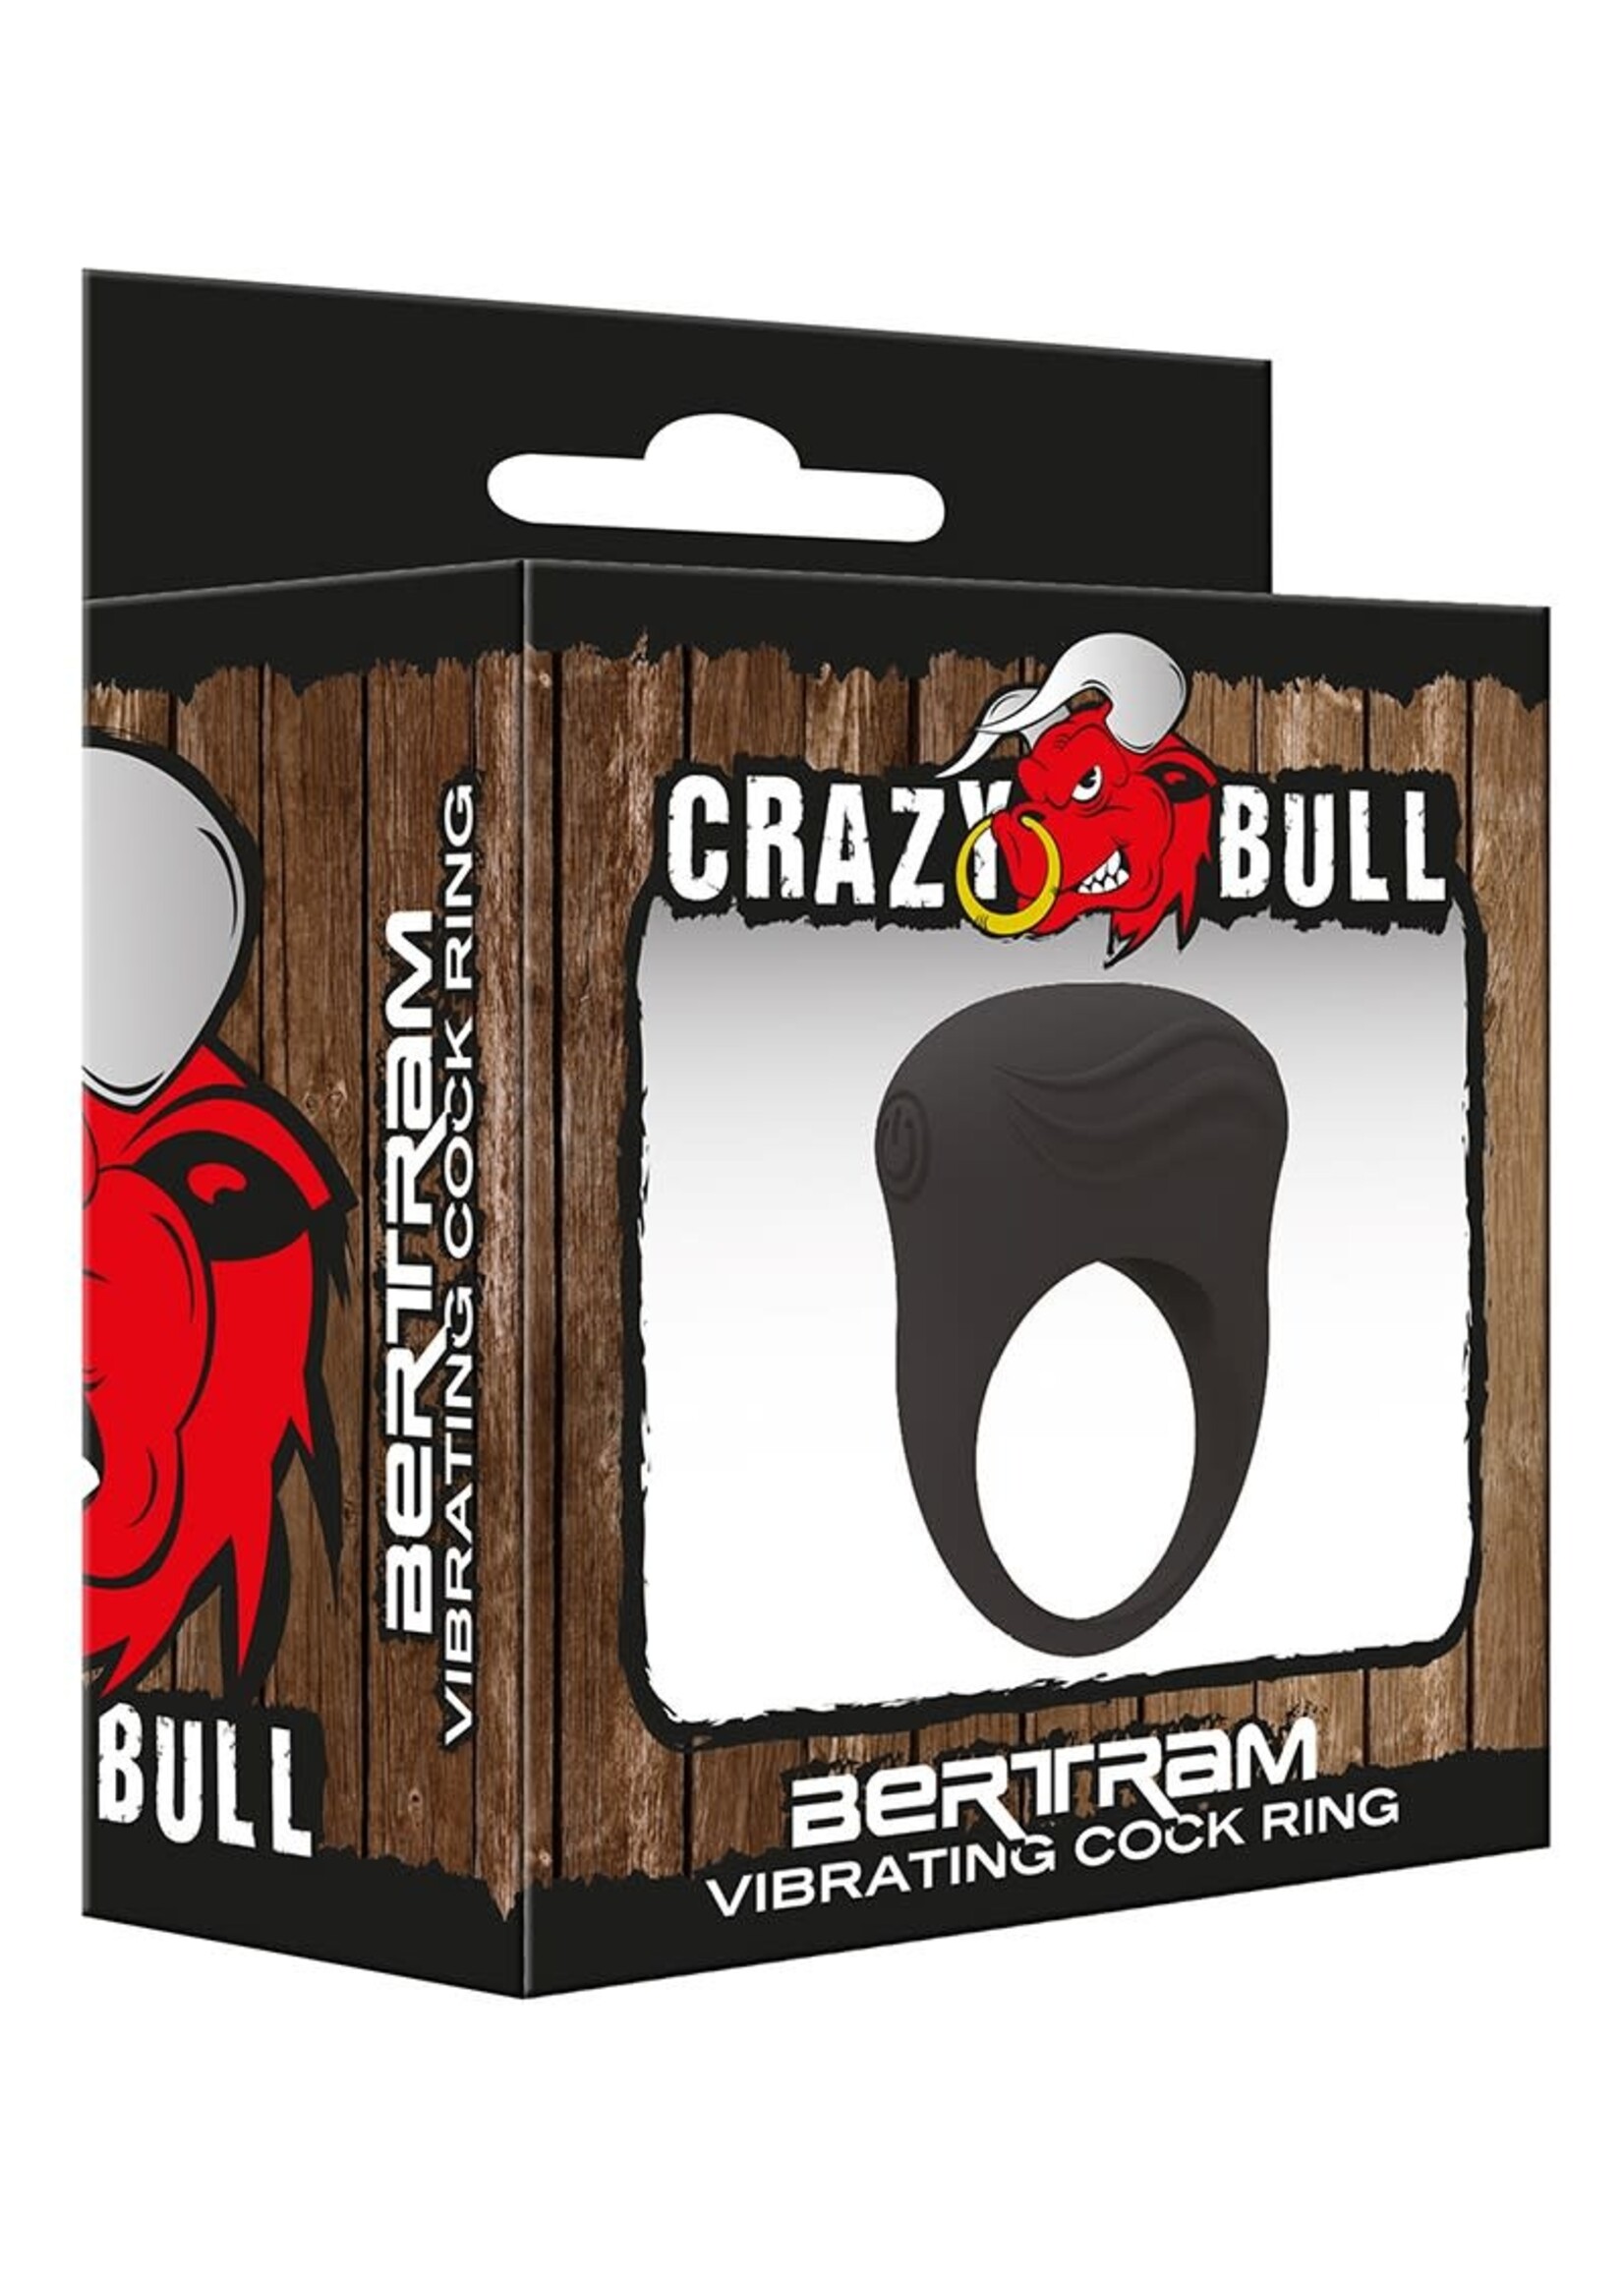 Crazy Bull Bertram cockring